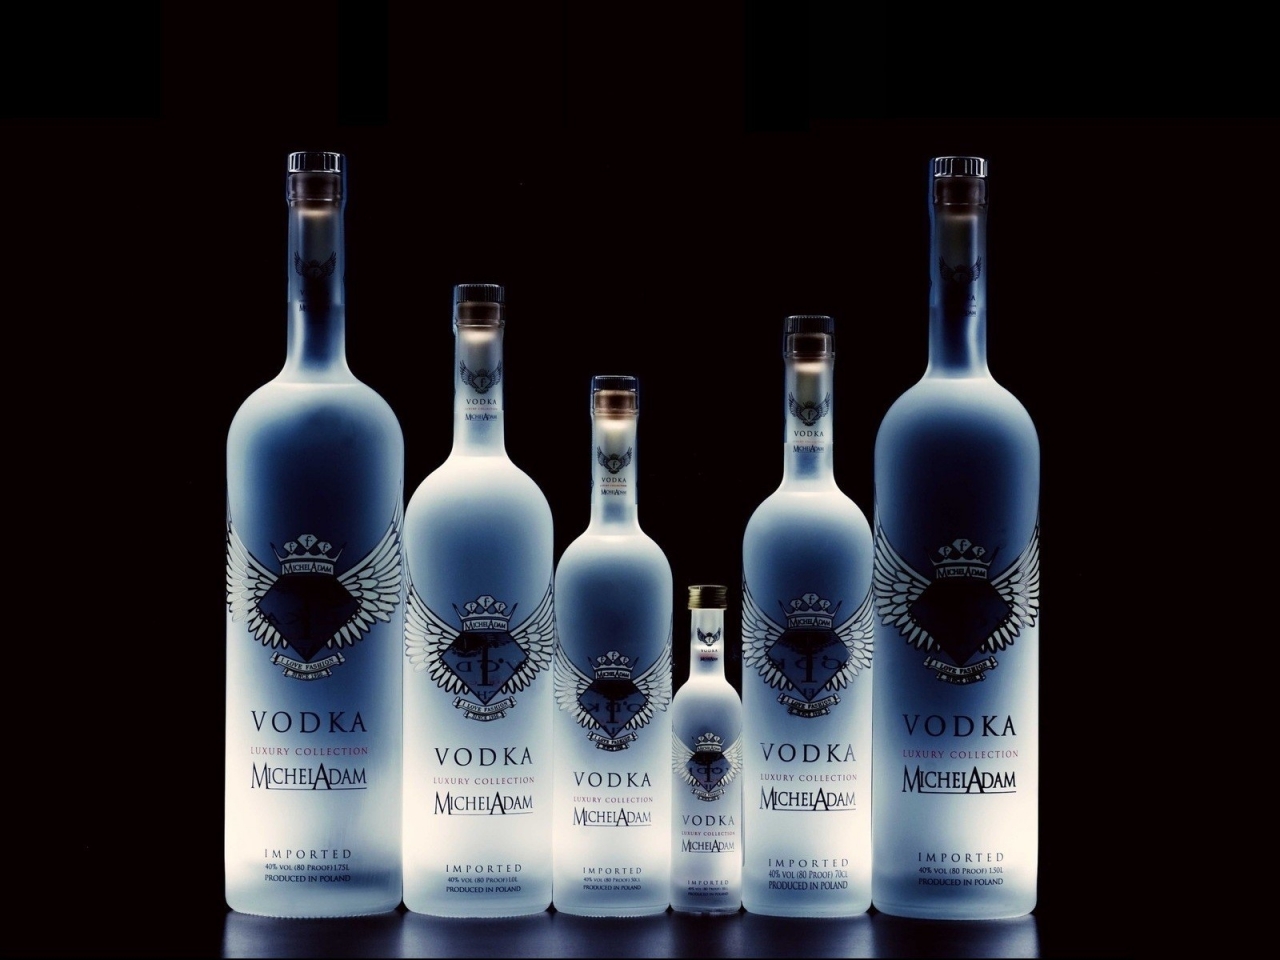 Michel Adam Vodka for 1280 x 960 resolution